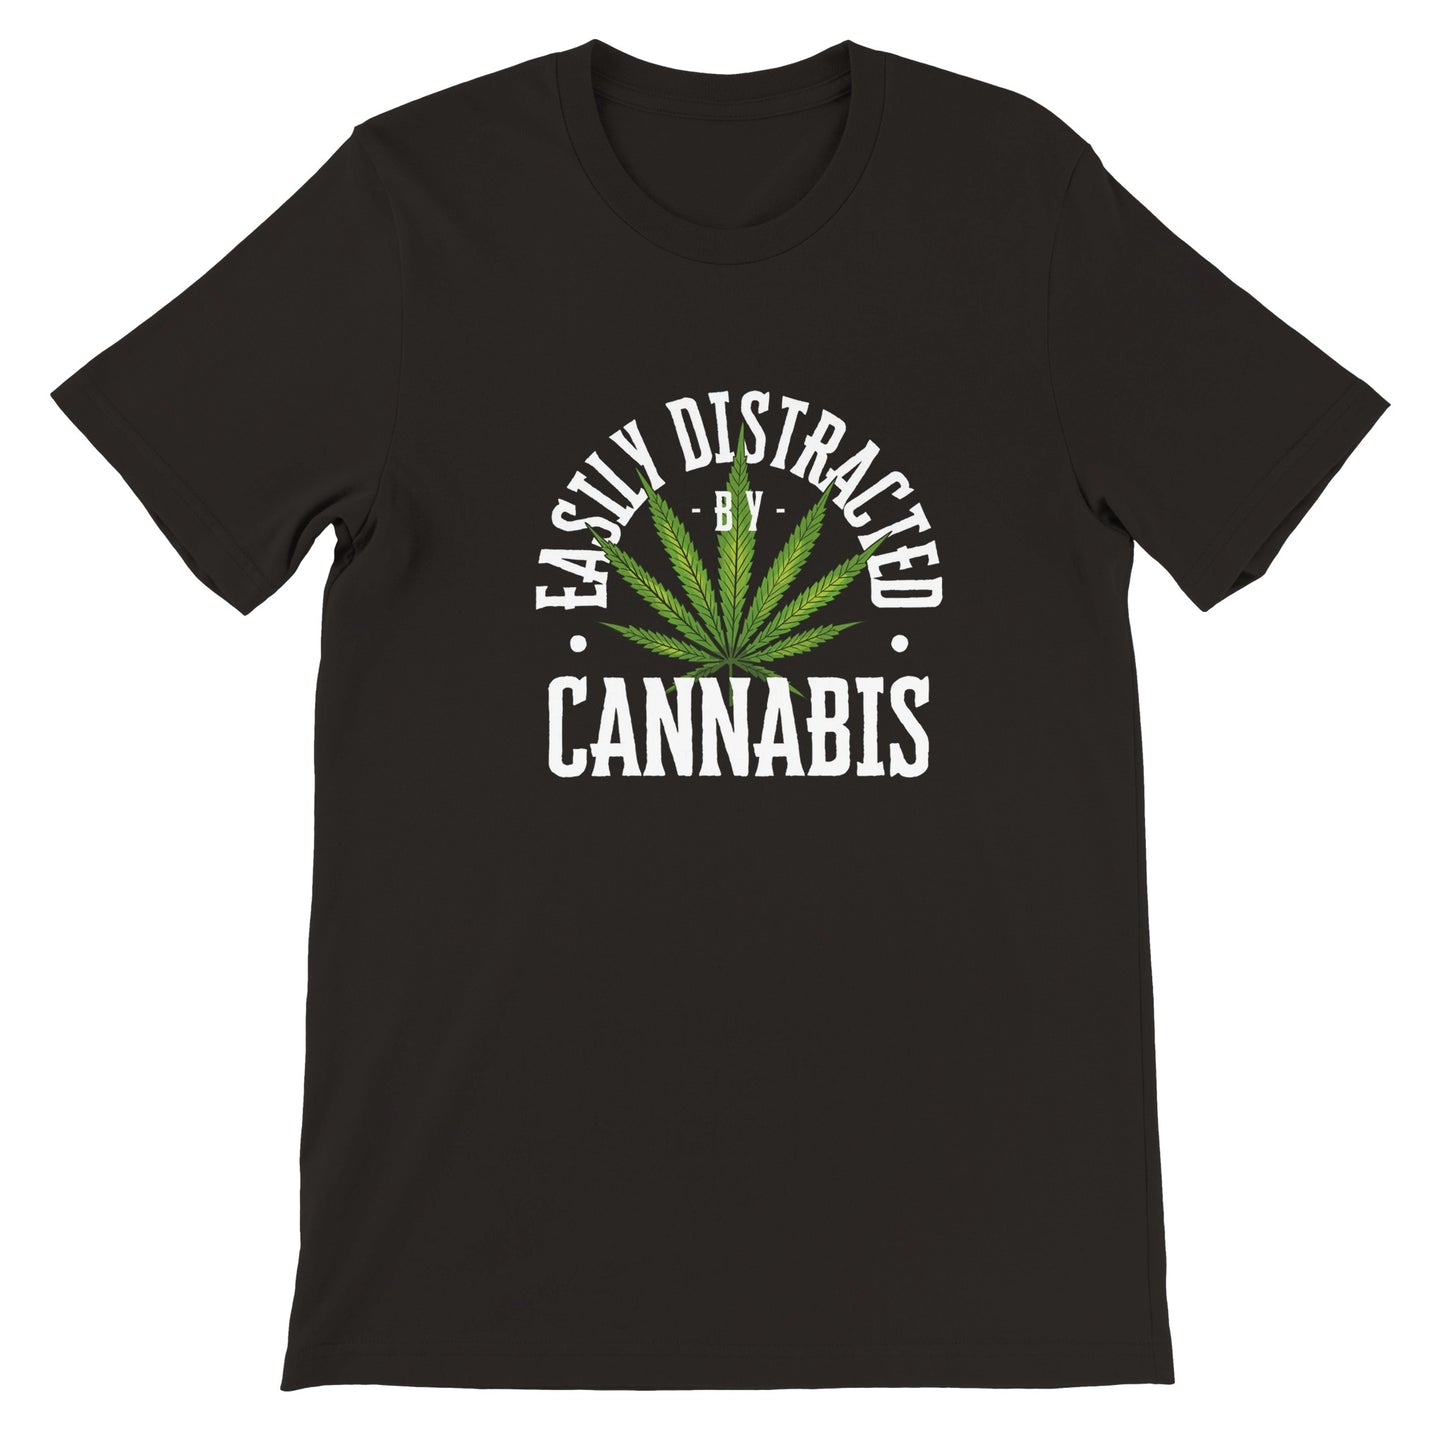 Easily Distracted By Cannabis T-shirt dankweedtees